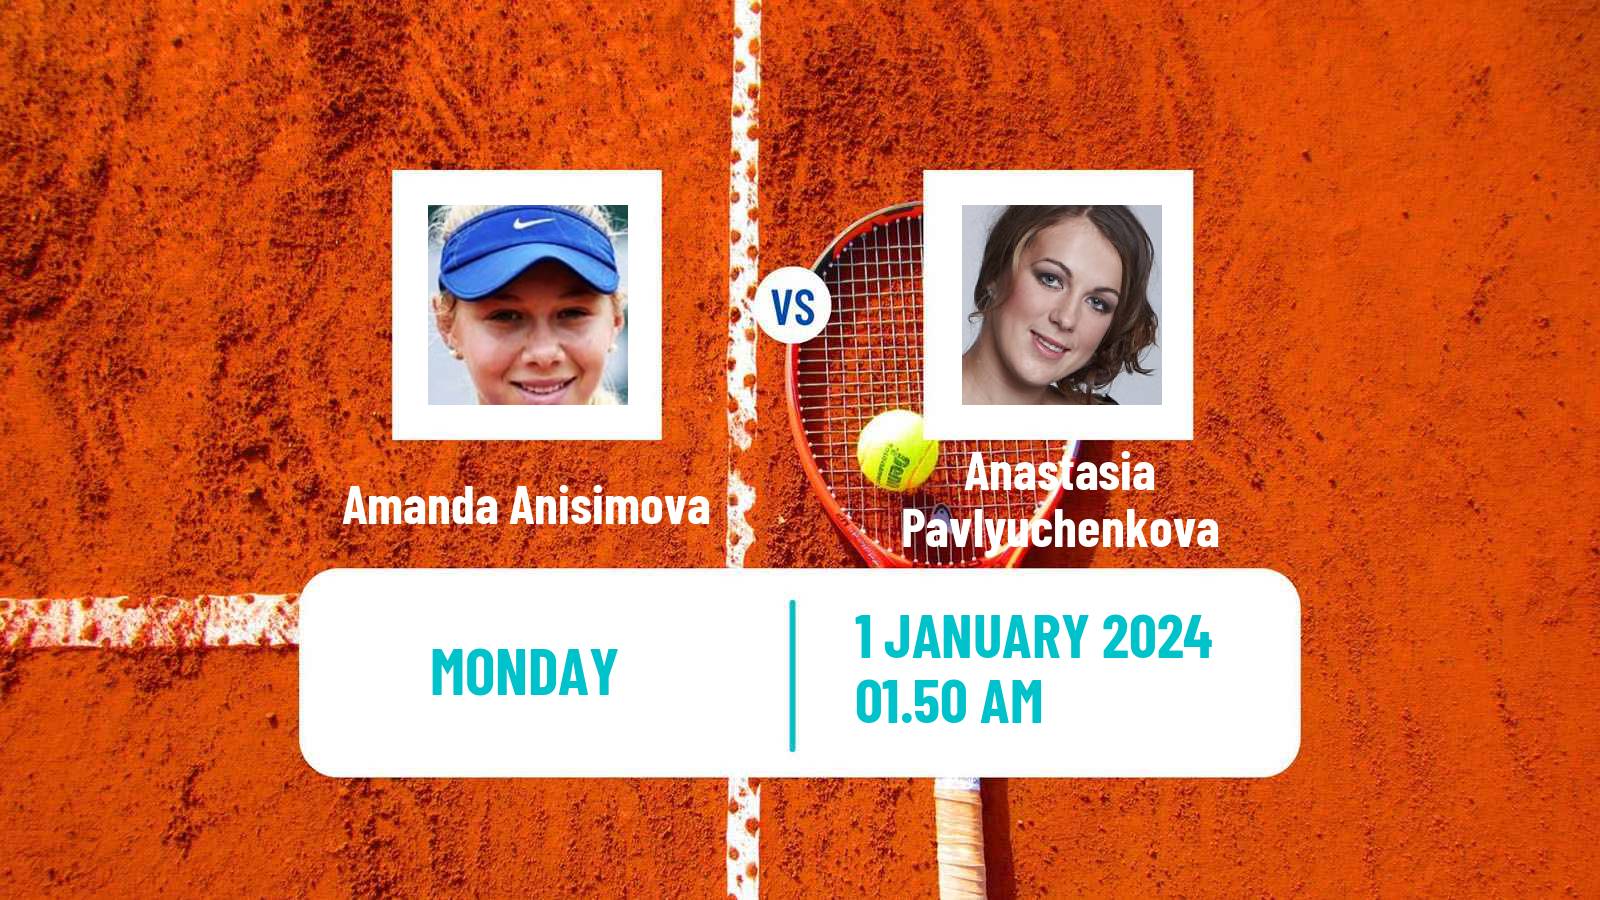 Tennis WTA Auckland Amanda Anisimova - Anastasia Pavlyuchenkova